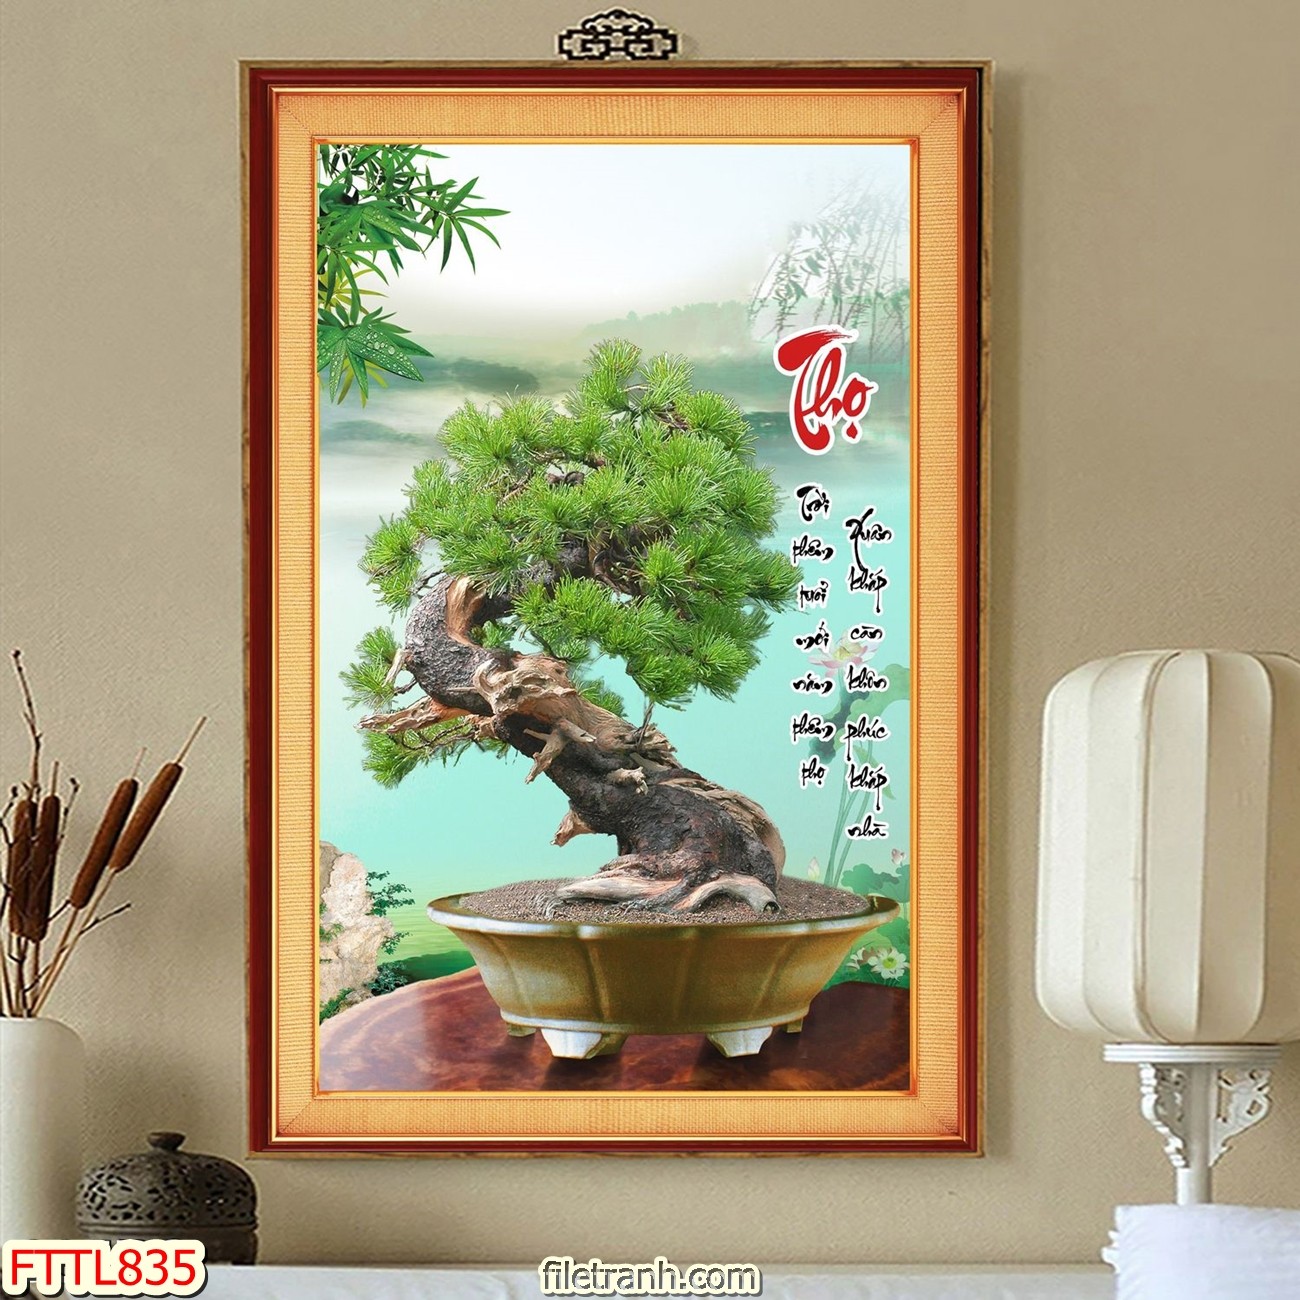 https://filetranh.com/file-tranh-chau-mai-bonsai/file-tranh-chau-mai-bonsai-fttl835.html